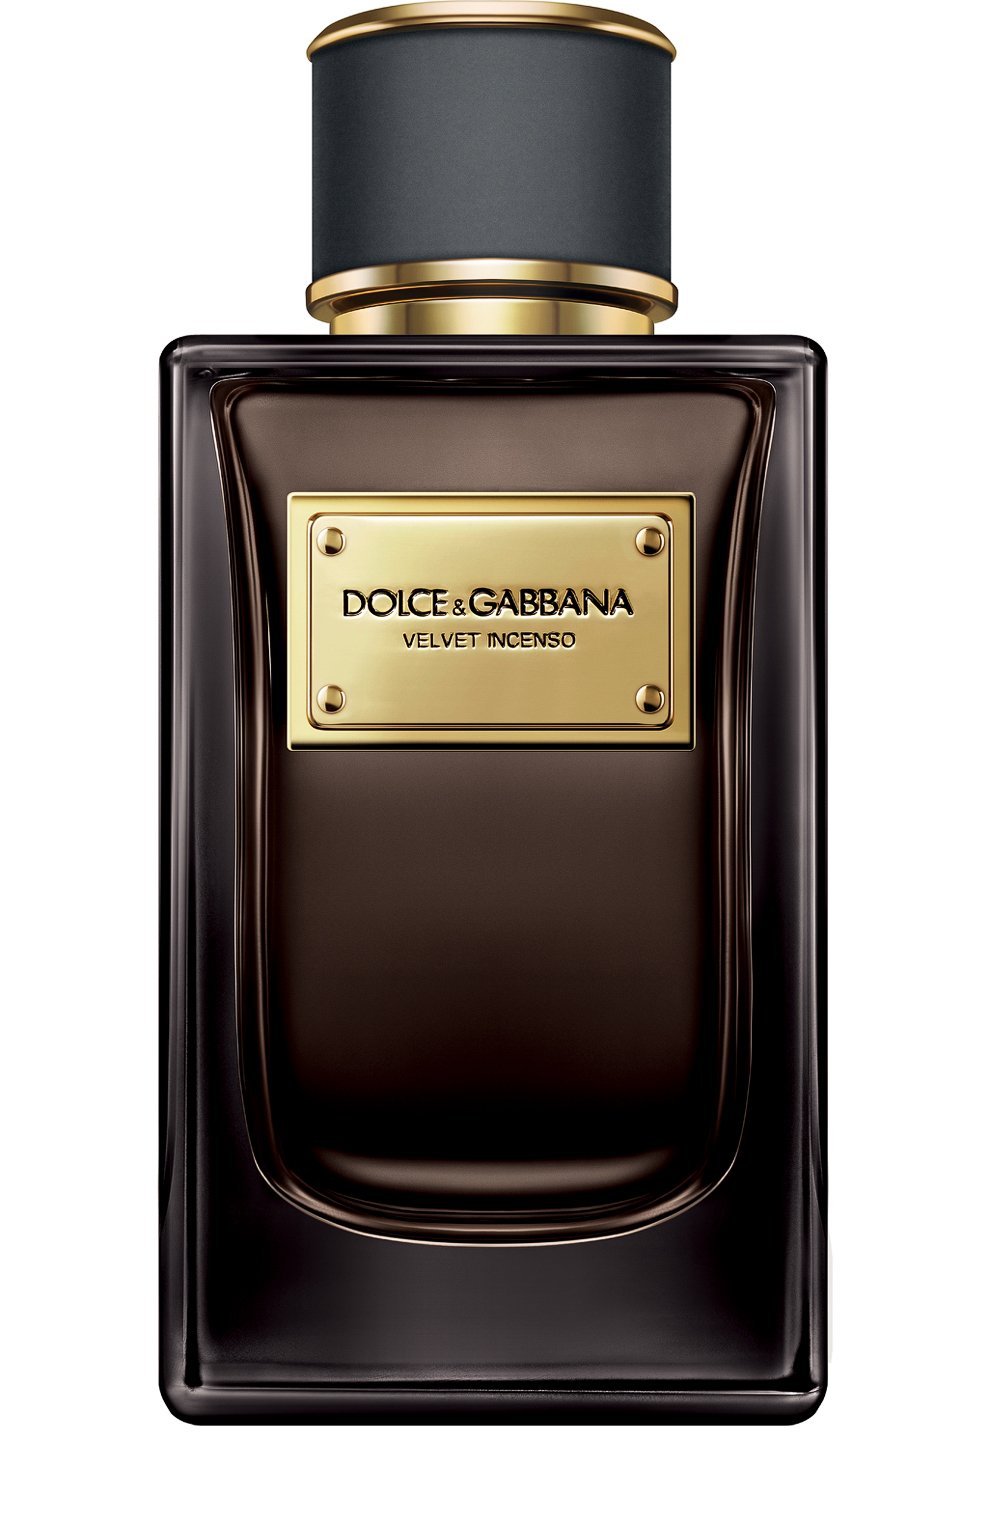 Dolce & Gabbana Velvet Incenso EDP: описание аромата, основные ноты ...